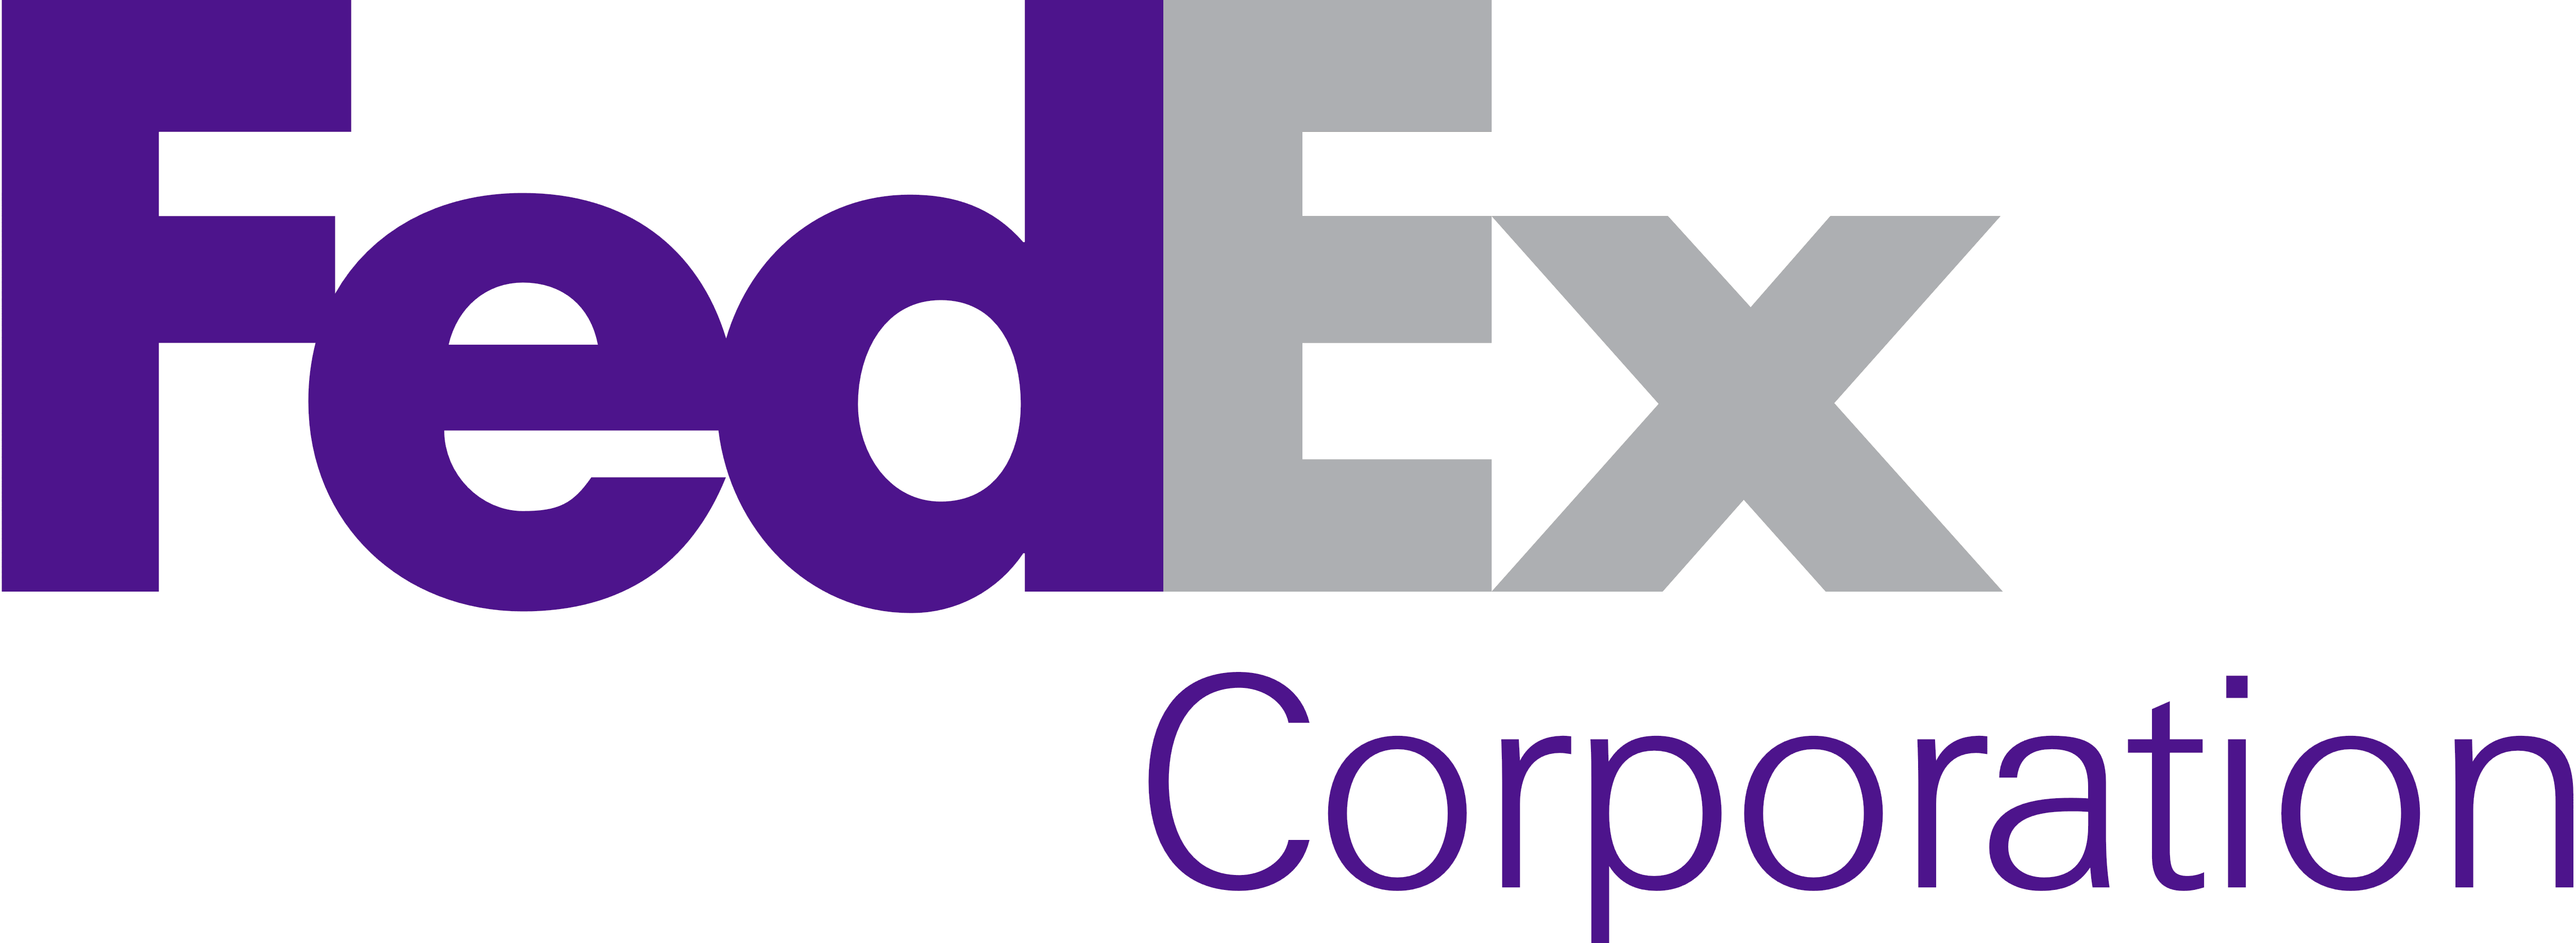 FedEx Corporation Operating C